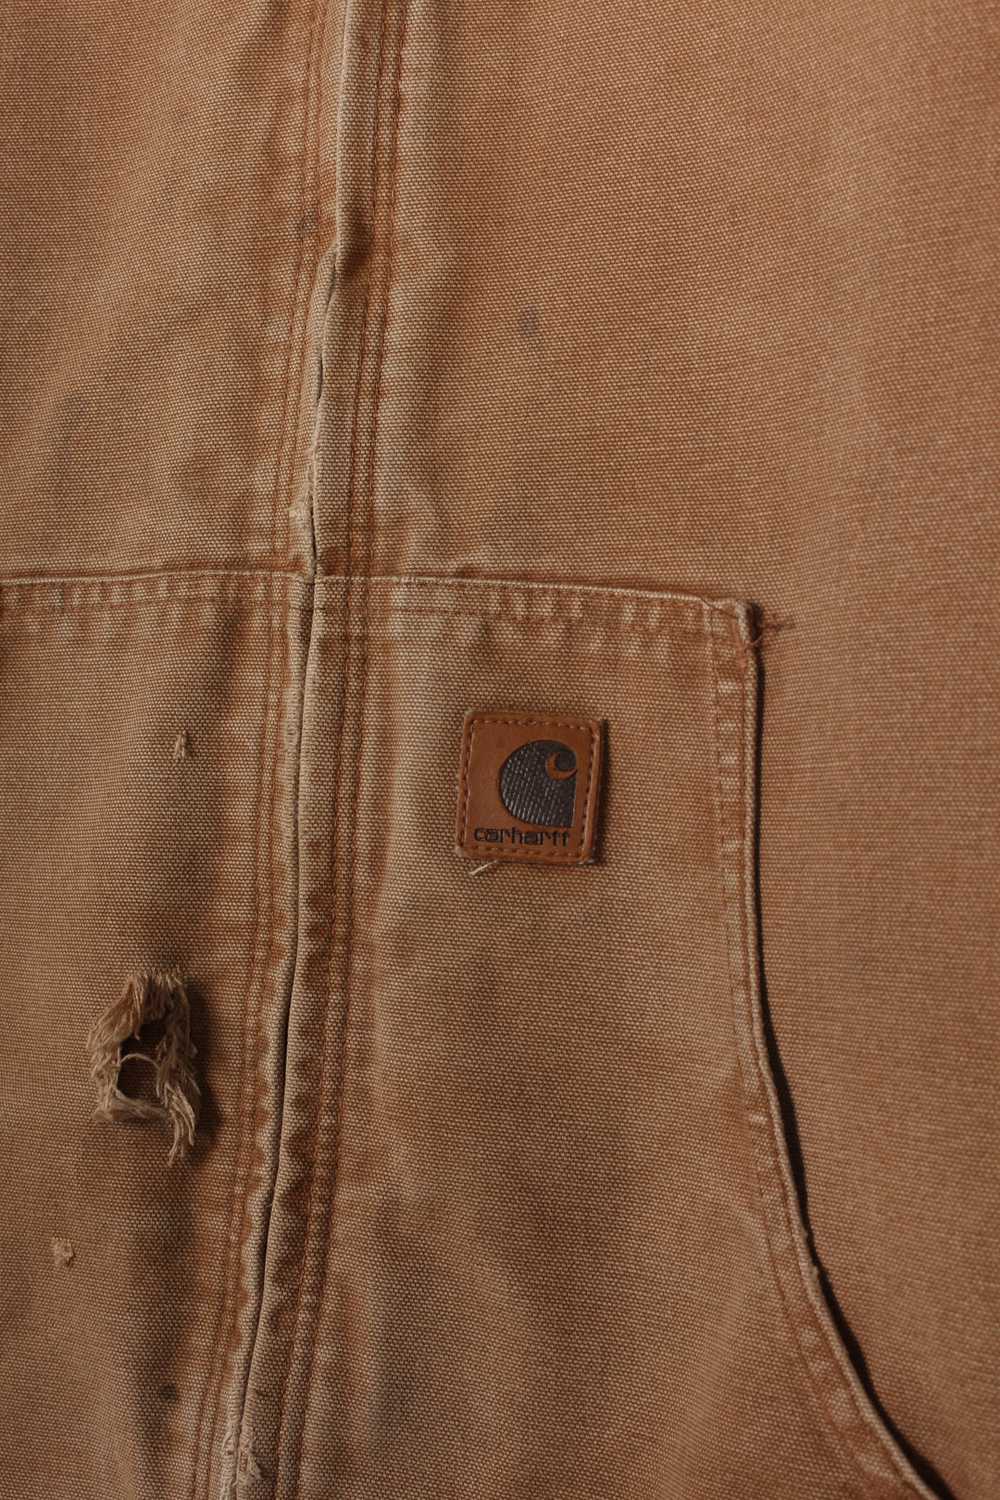 Vintage Carhartt Active Jacket Small - image 2